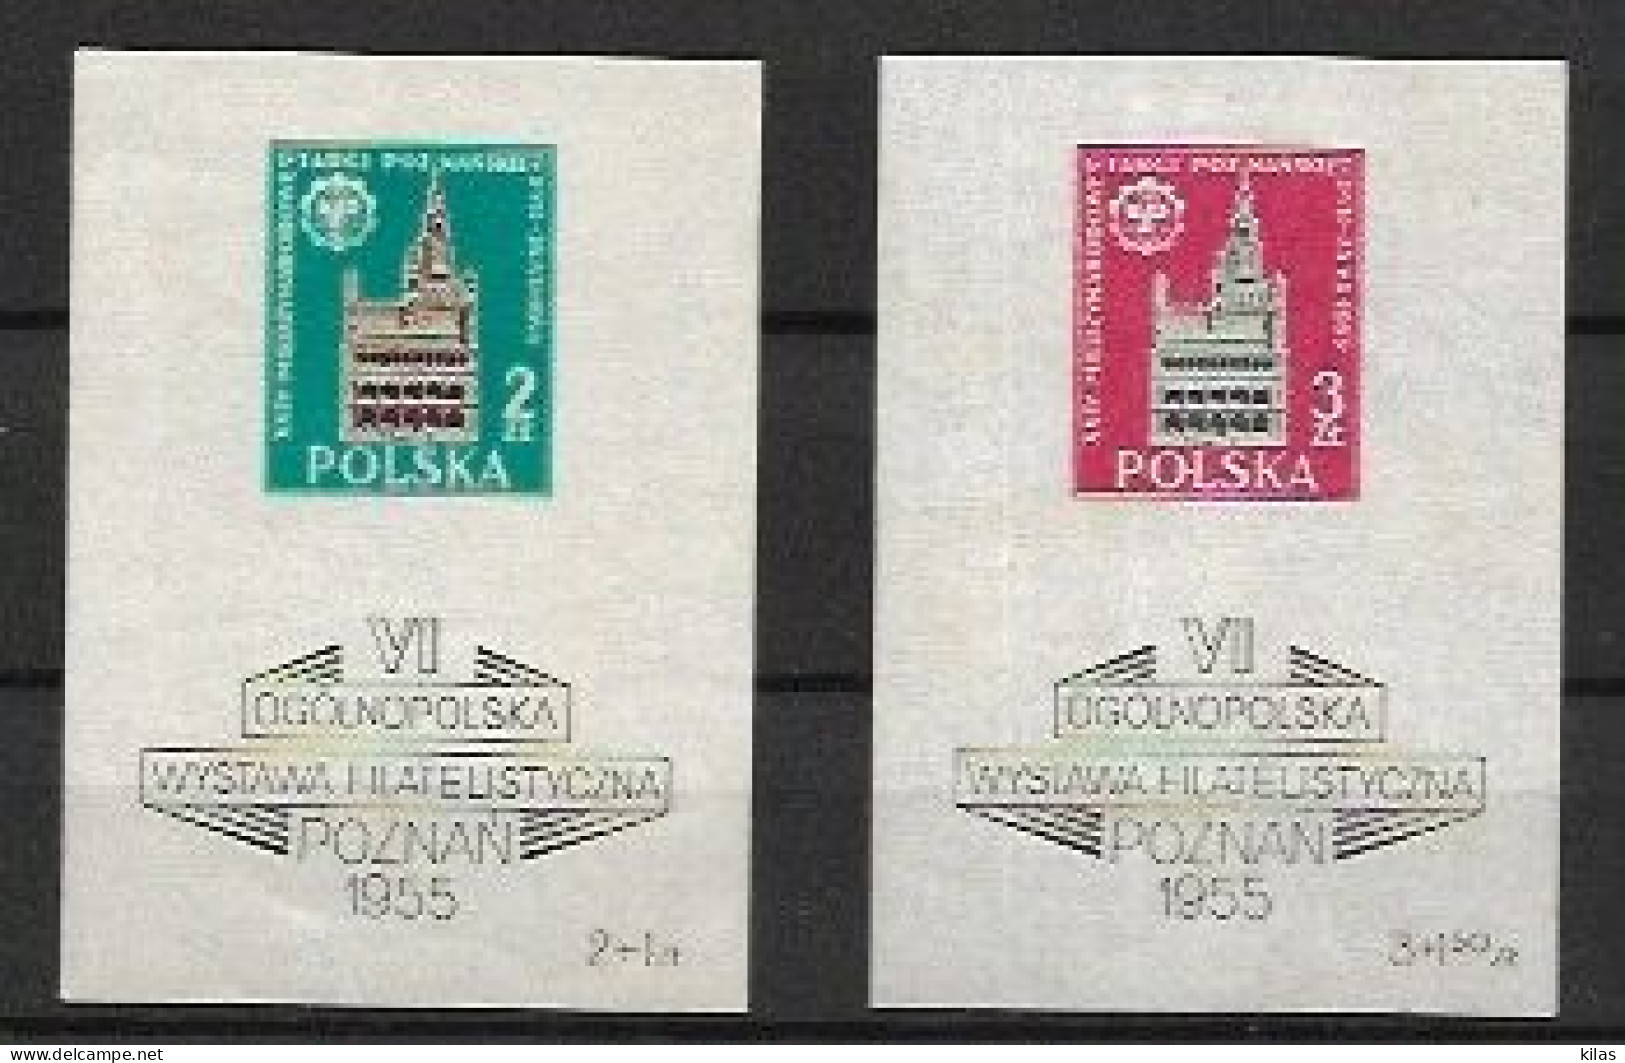 POLAND 1955 Sixth Poznan Philatelic Exhibition MNH - Blocks & Kleinbögen